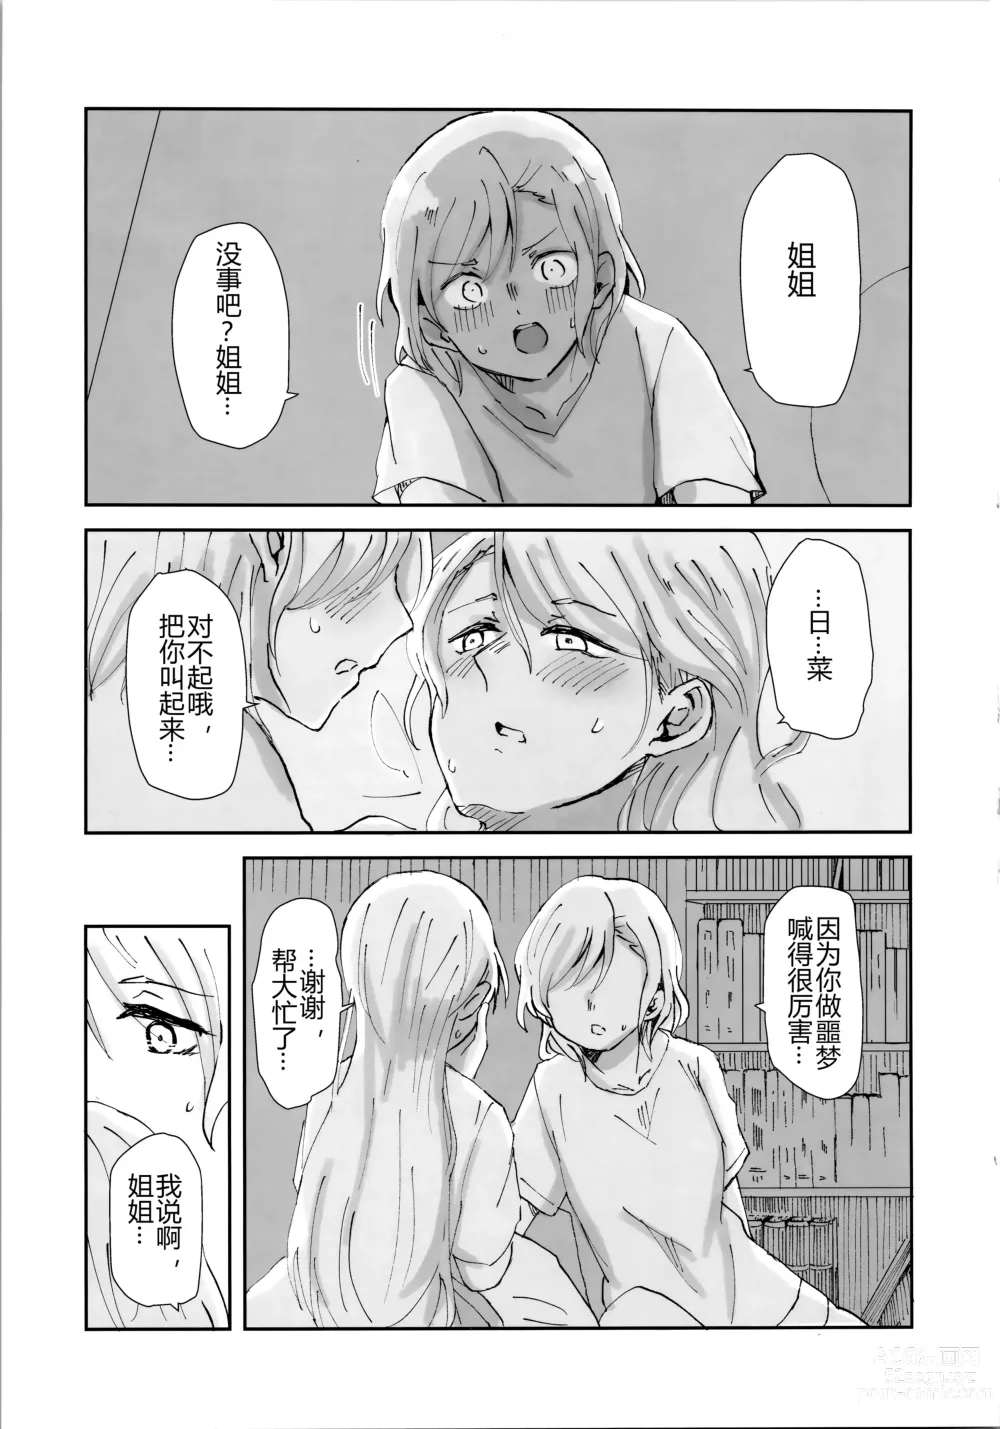 Page 5 of doujinshi 只要爱着彼此就好